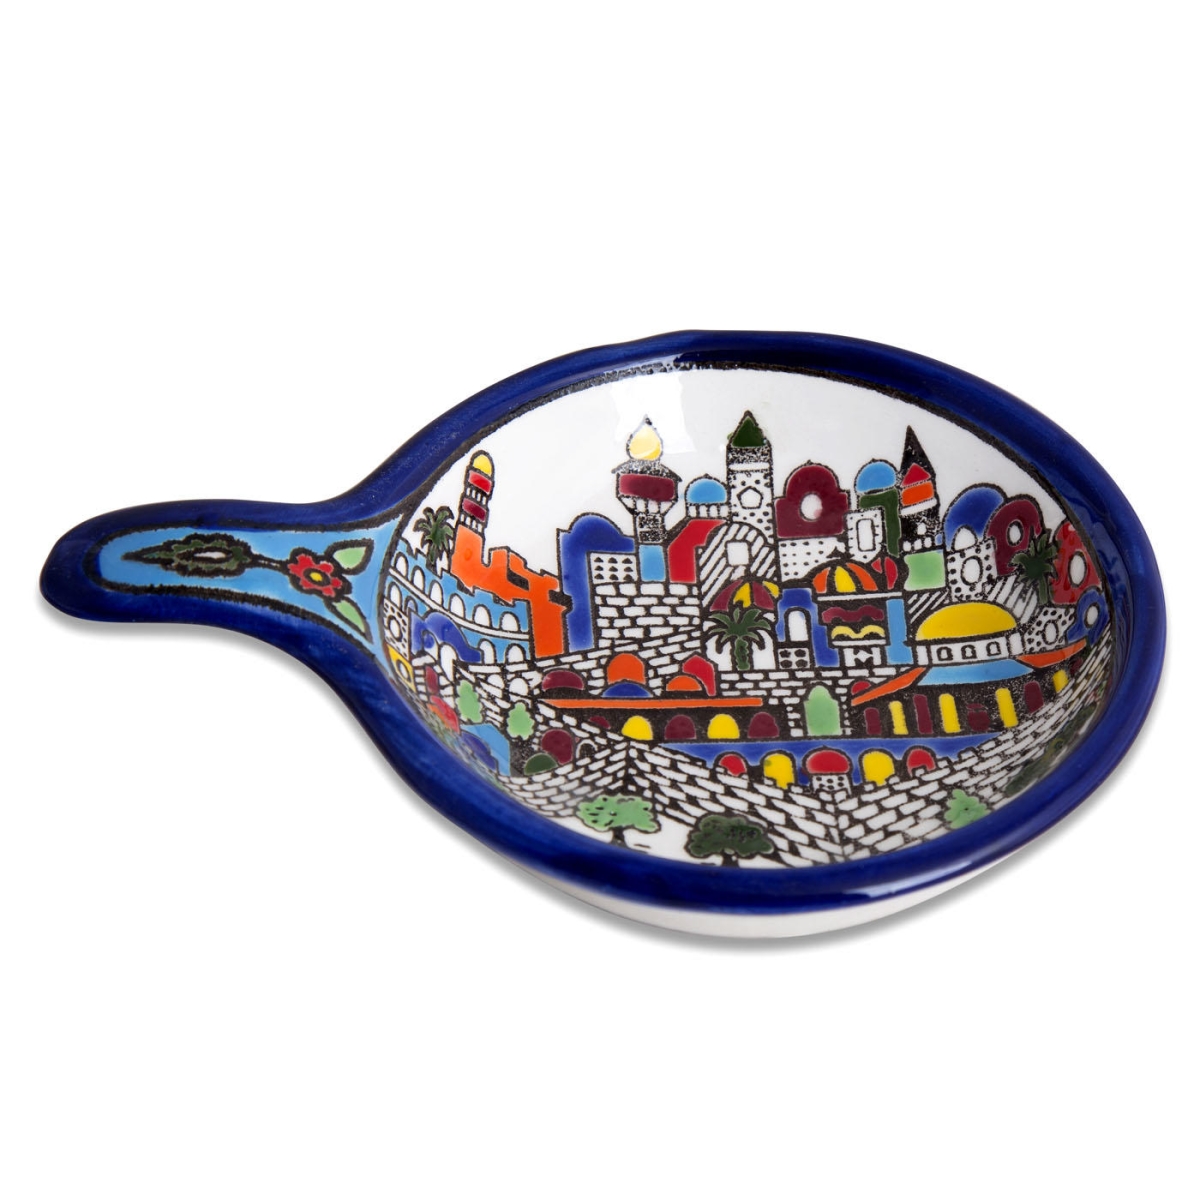 Armenian Ceramics "Frying Pan" Serving Dish - Jerusalem - 1